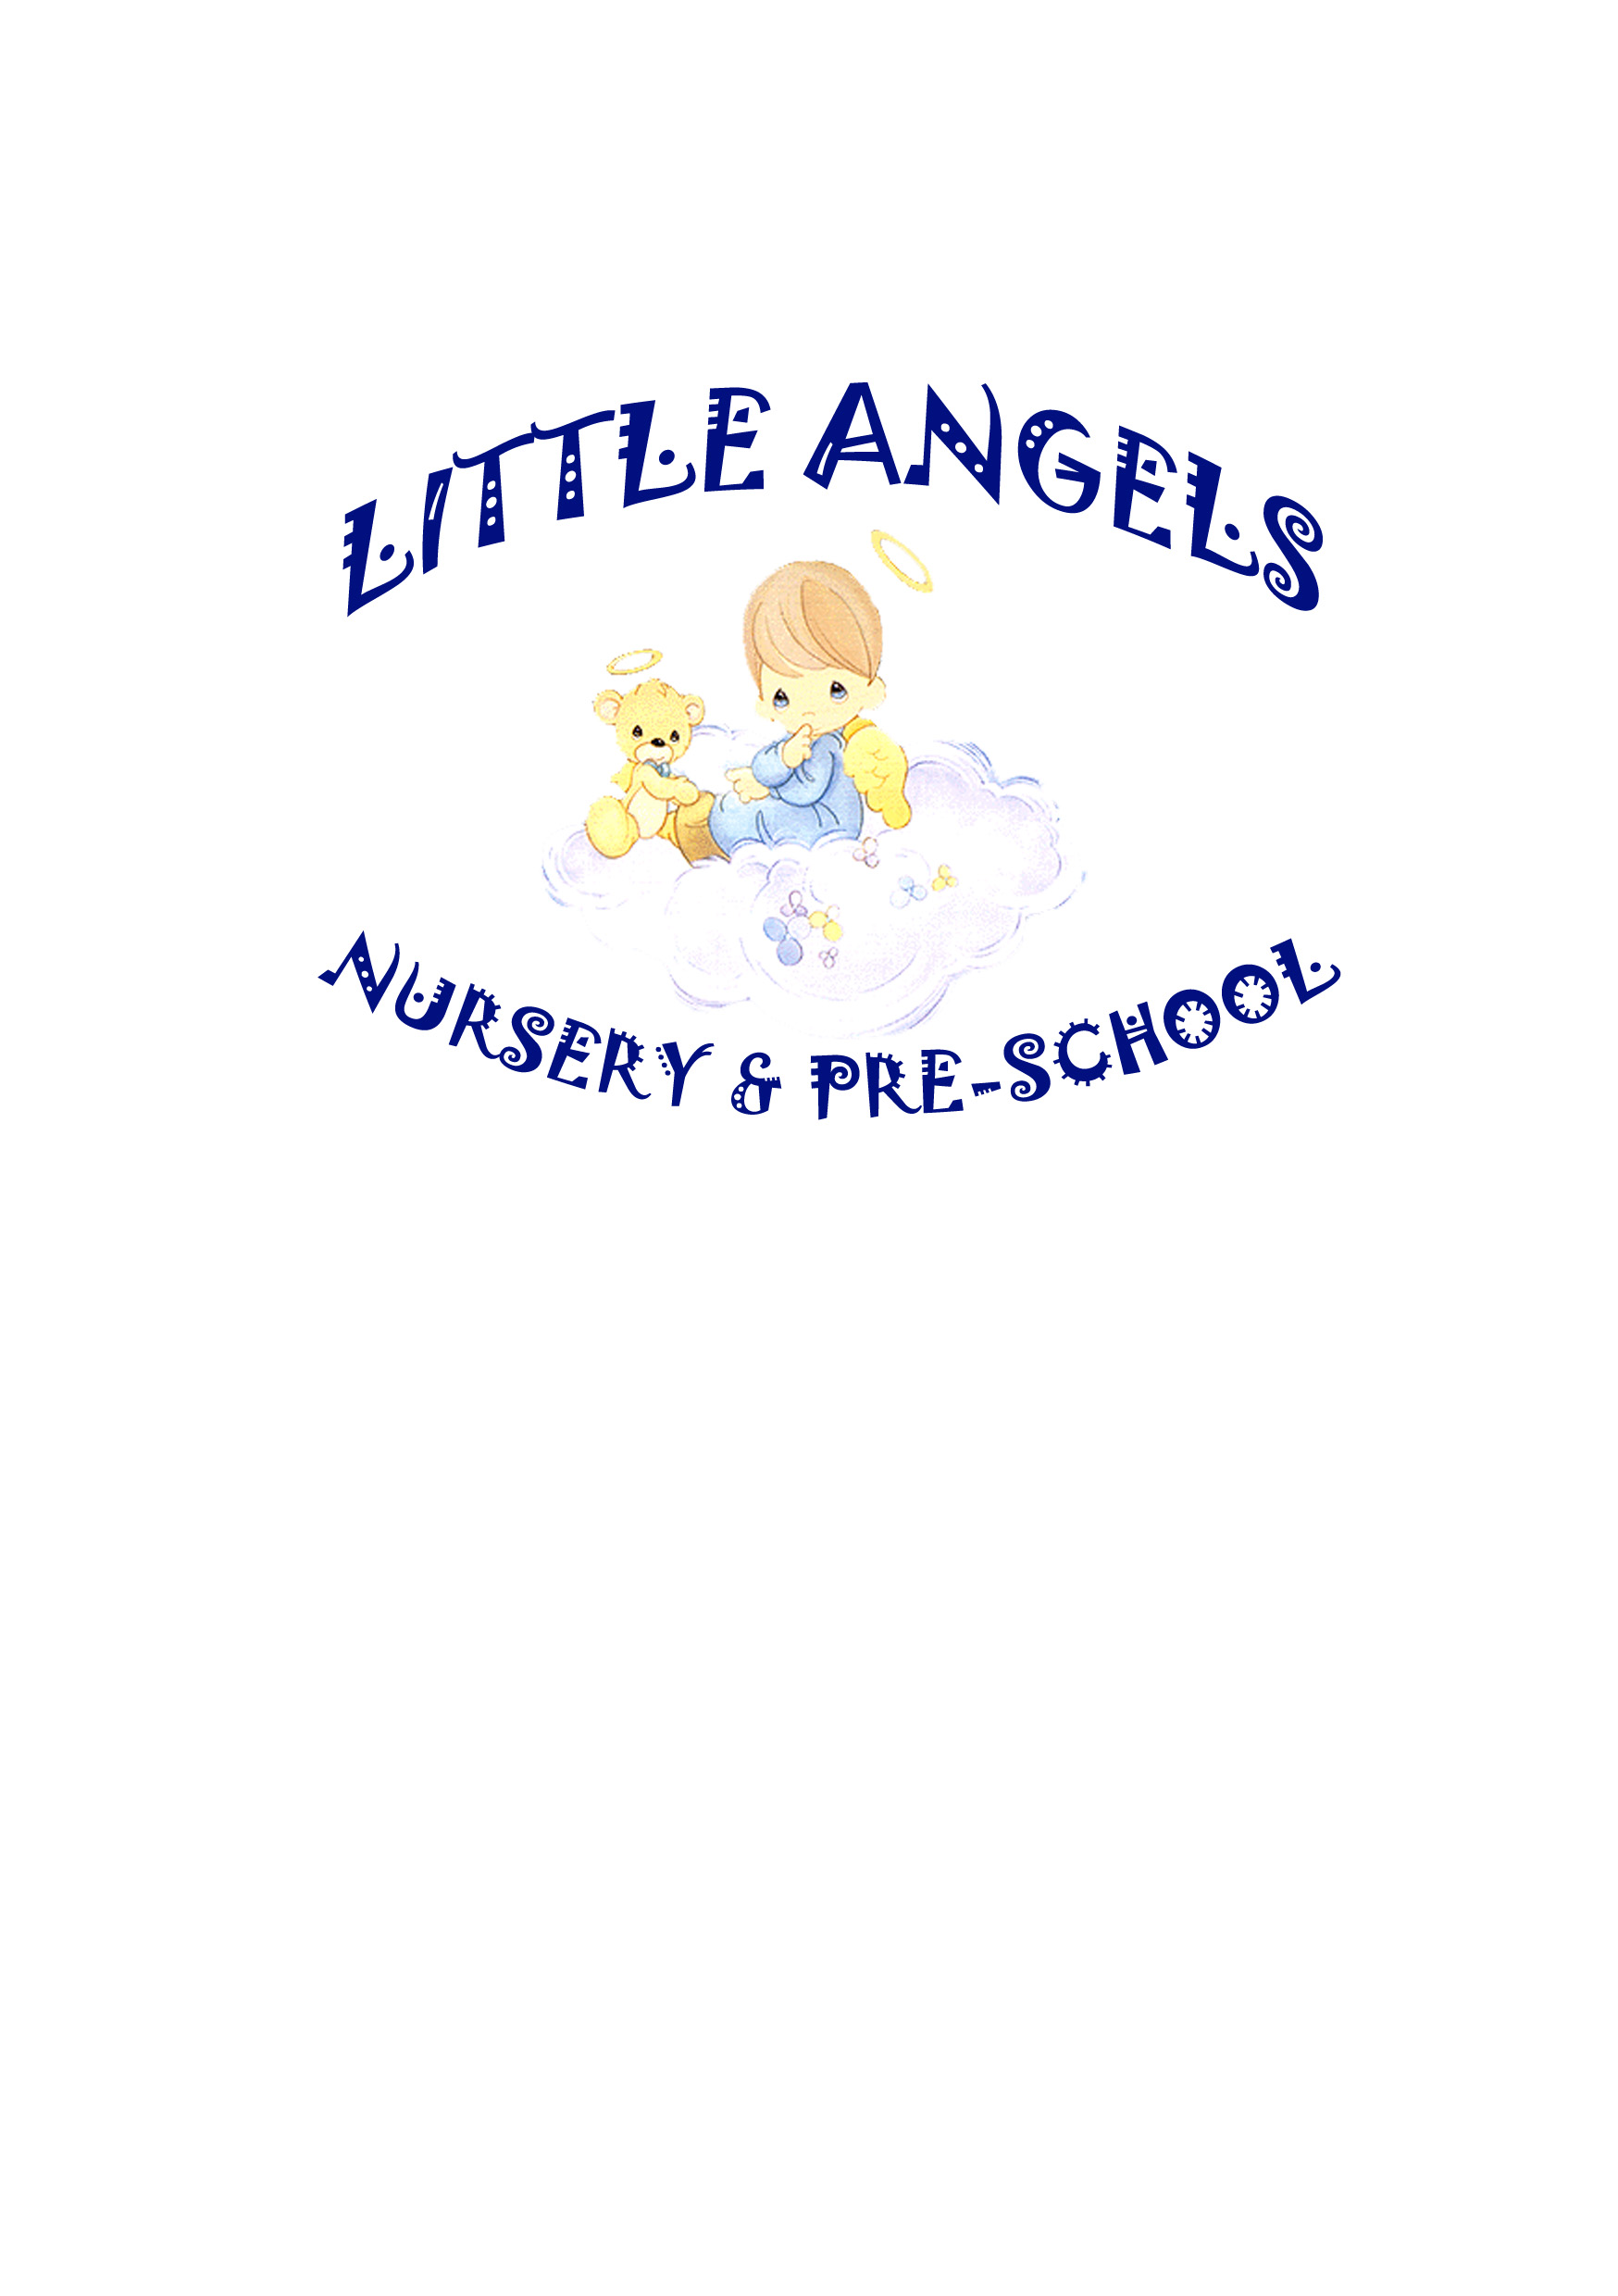 Little Angles Nursery